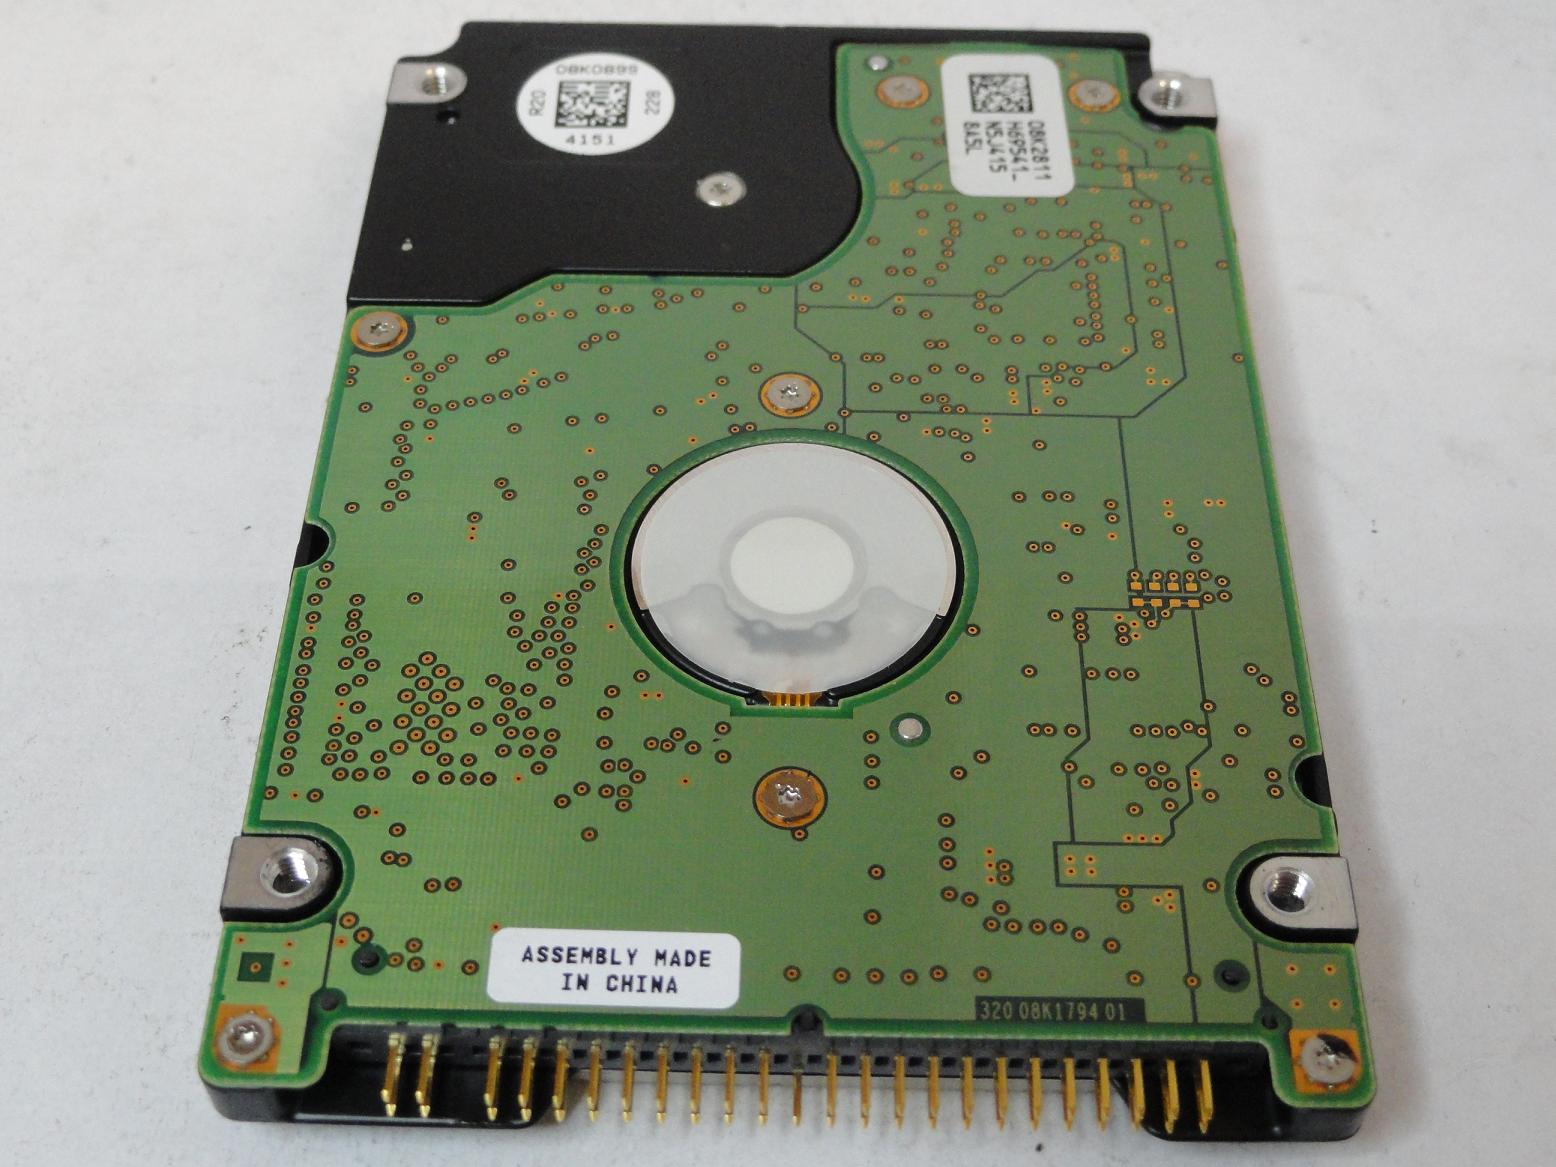 PR23951_13G1815_Hitachi IBM 30GB IDE 4200rpm 2.5in HDD - Image2